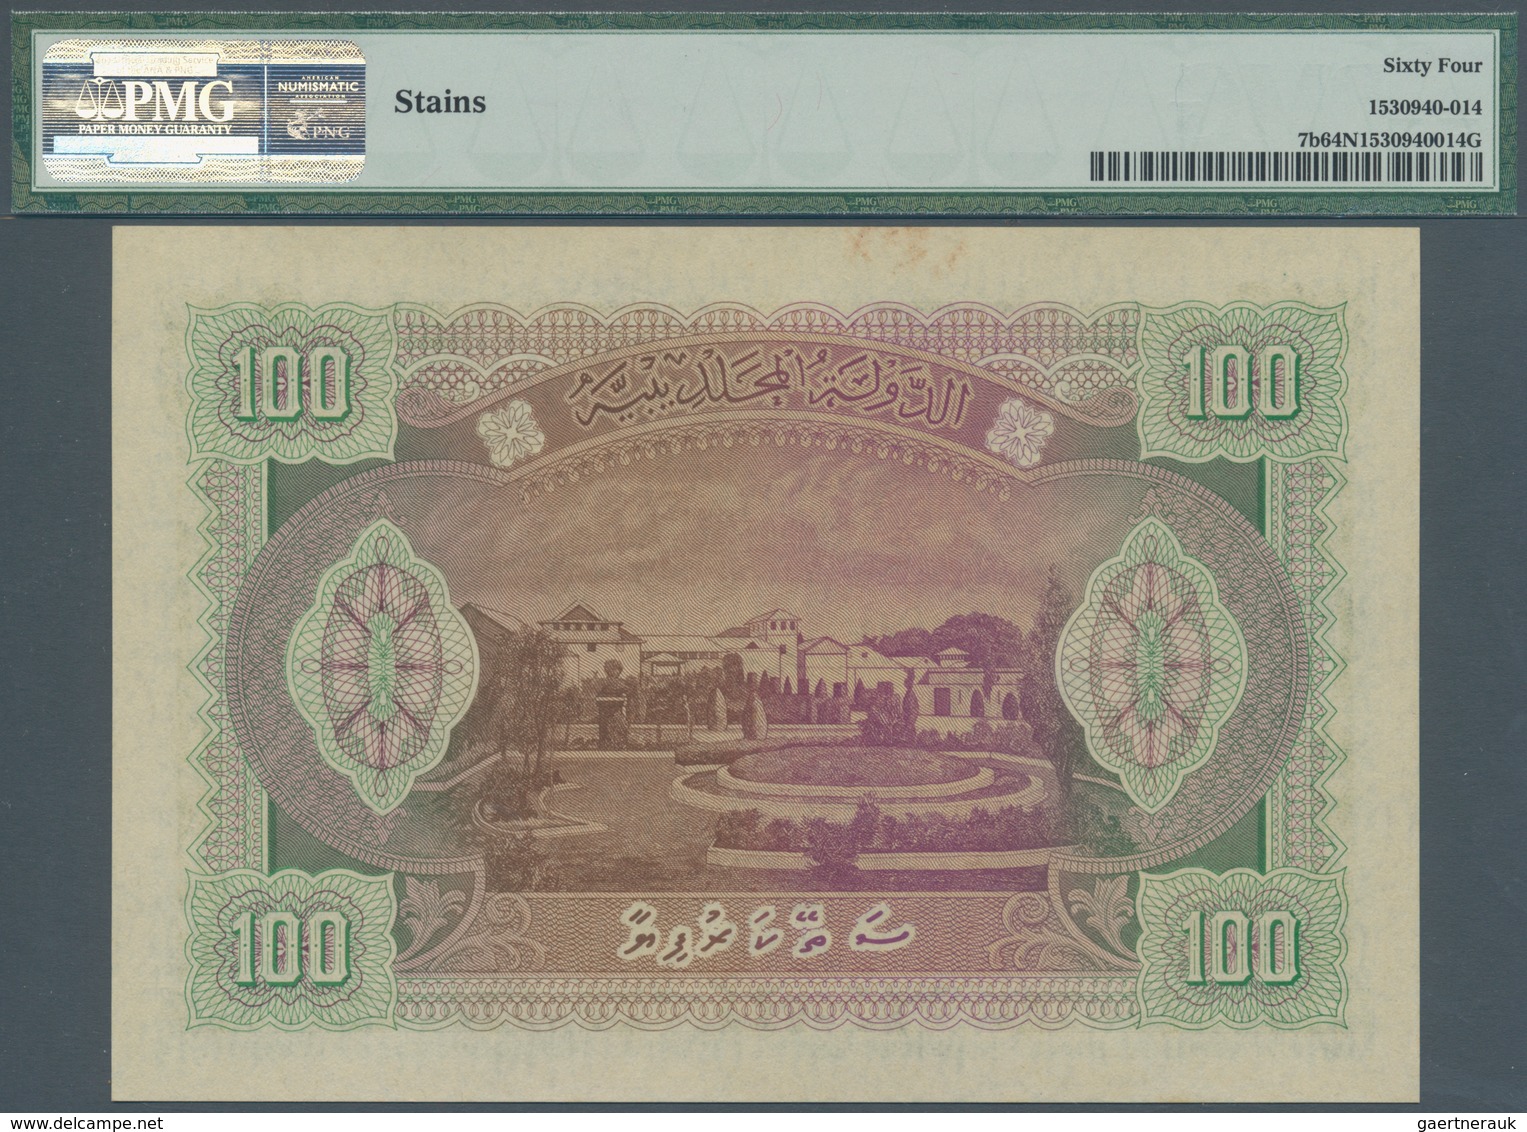 01999 Maldives / Malediven: Set Of 6 Notes Containing 1 To 100 Rupees 1960 P. 2b-7b, All PMG Graded 64 Cho - Maldivas